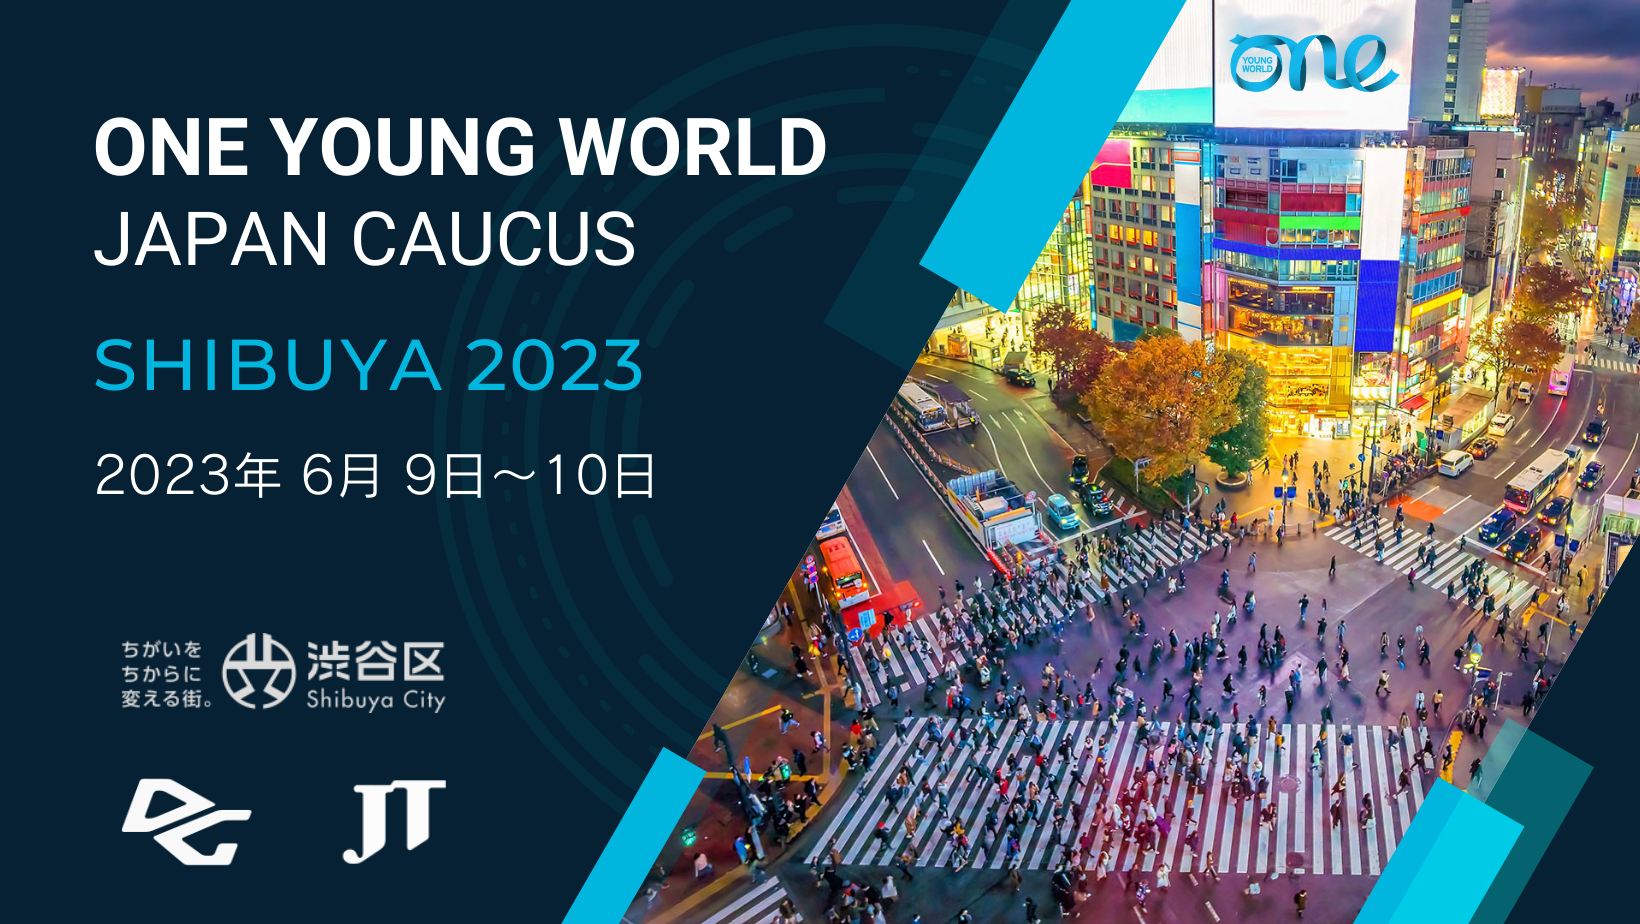 One Young World Japan Caucus - Shibuya 2023